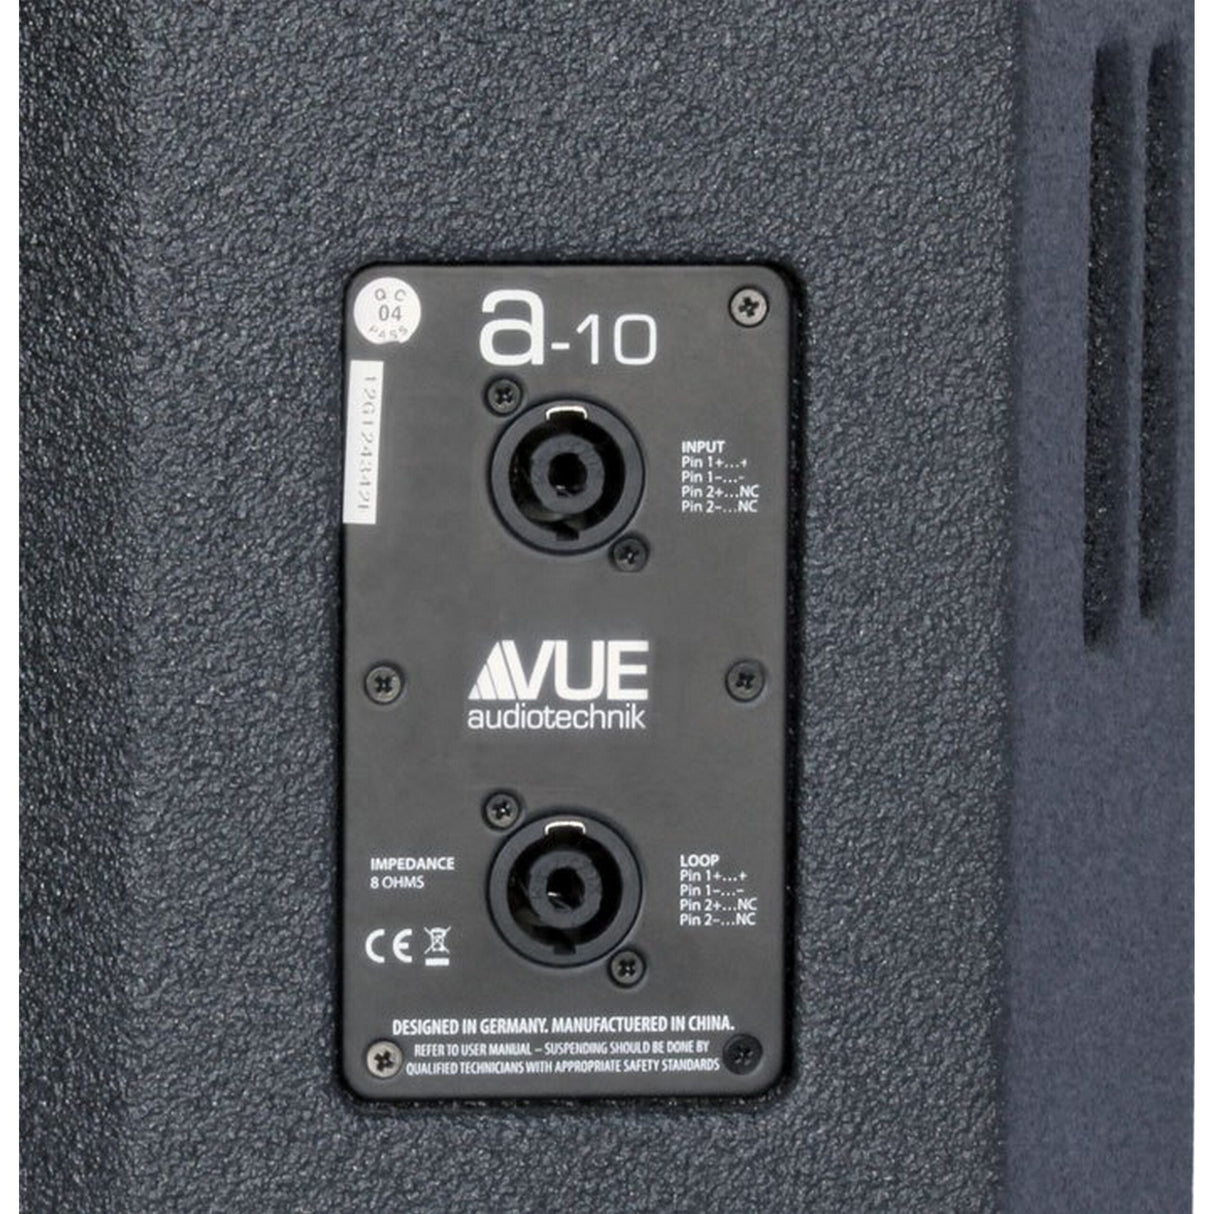 VUE Audiotechnik a-10 2-Way Passive Full Range System, 10 Inch